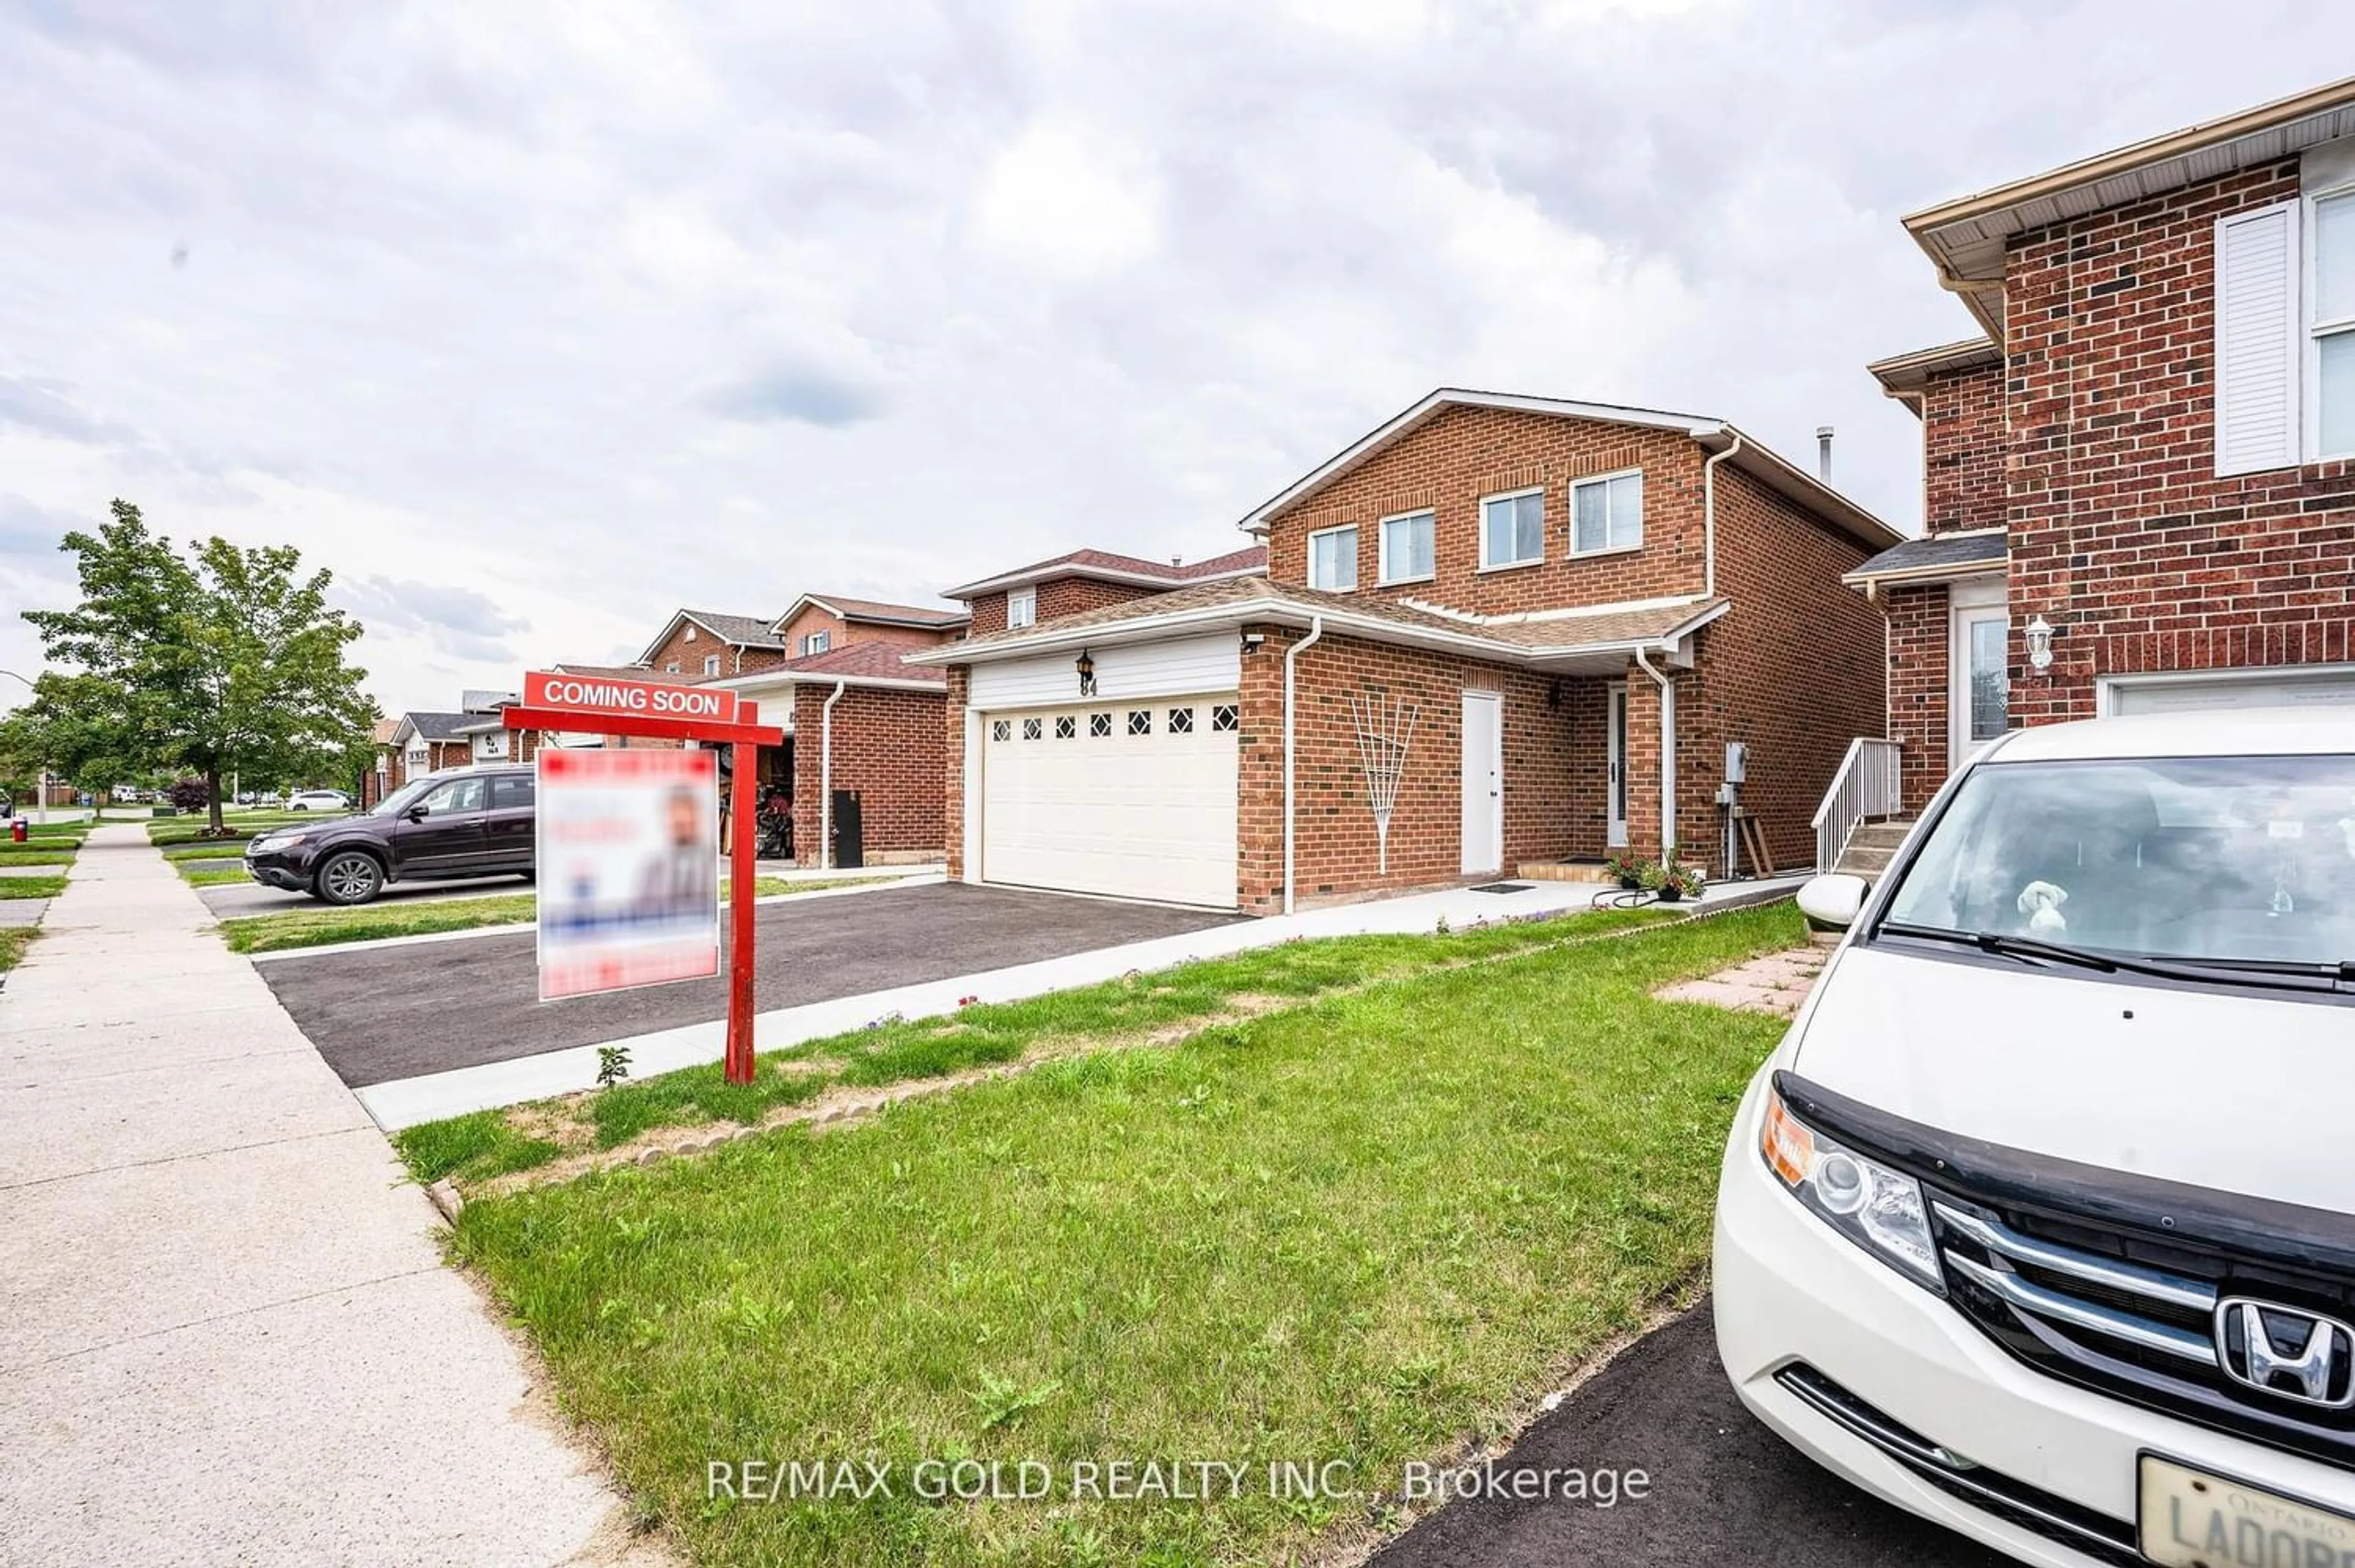 Frontside or backside of a home for 84 Metzak Dr, Brampton Ontario L6Z 4N4